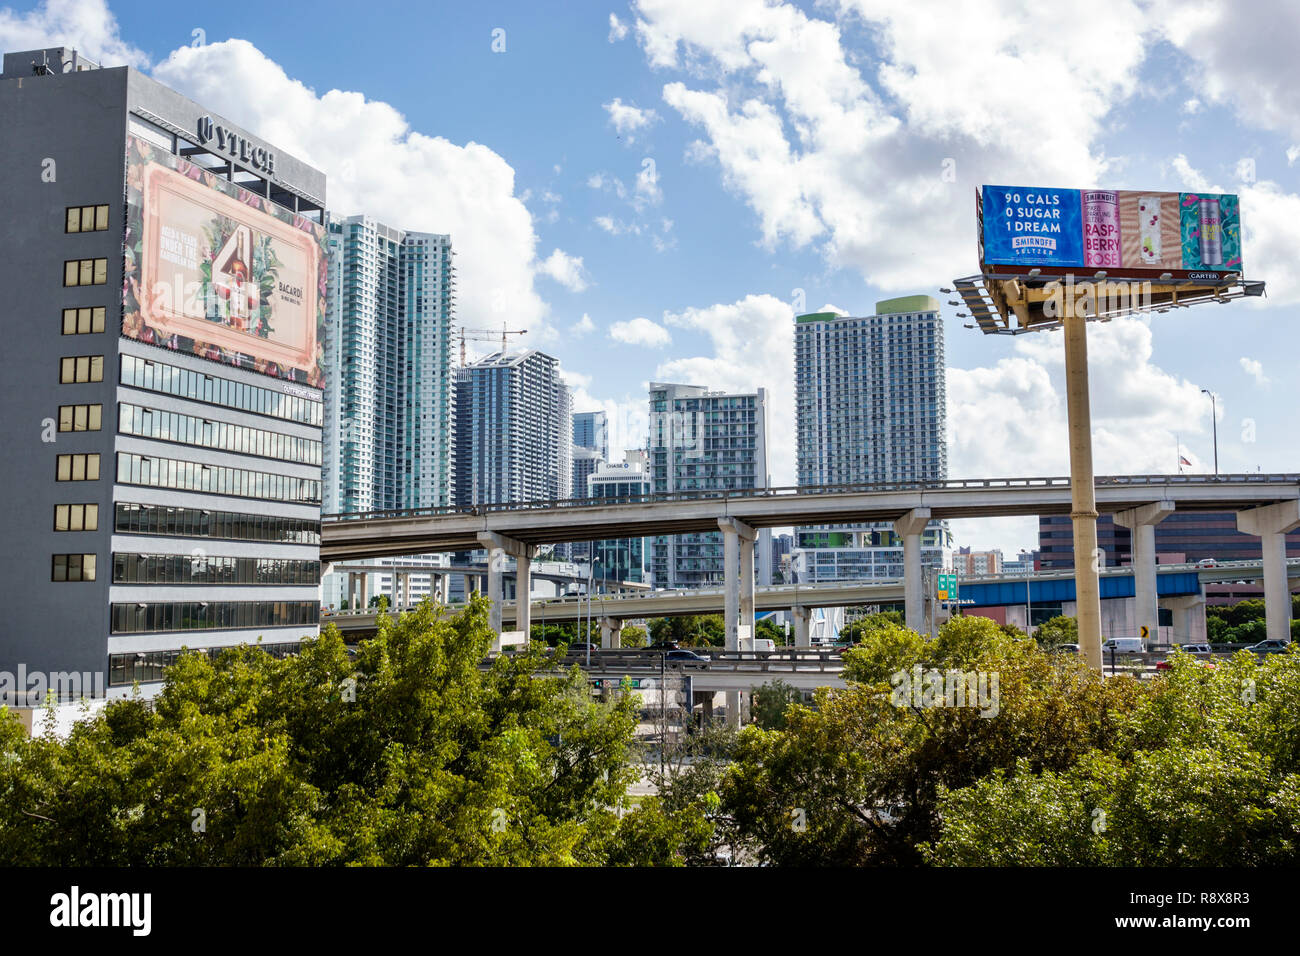 Miami Florida,city skyline billboard advertising raised highways,buildings high rise apartment buildings condominium Stock Photo